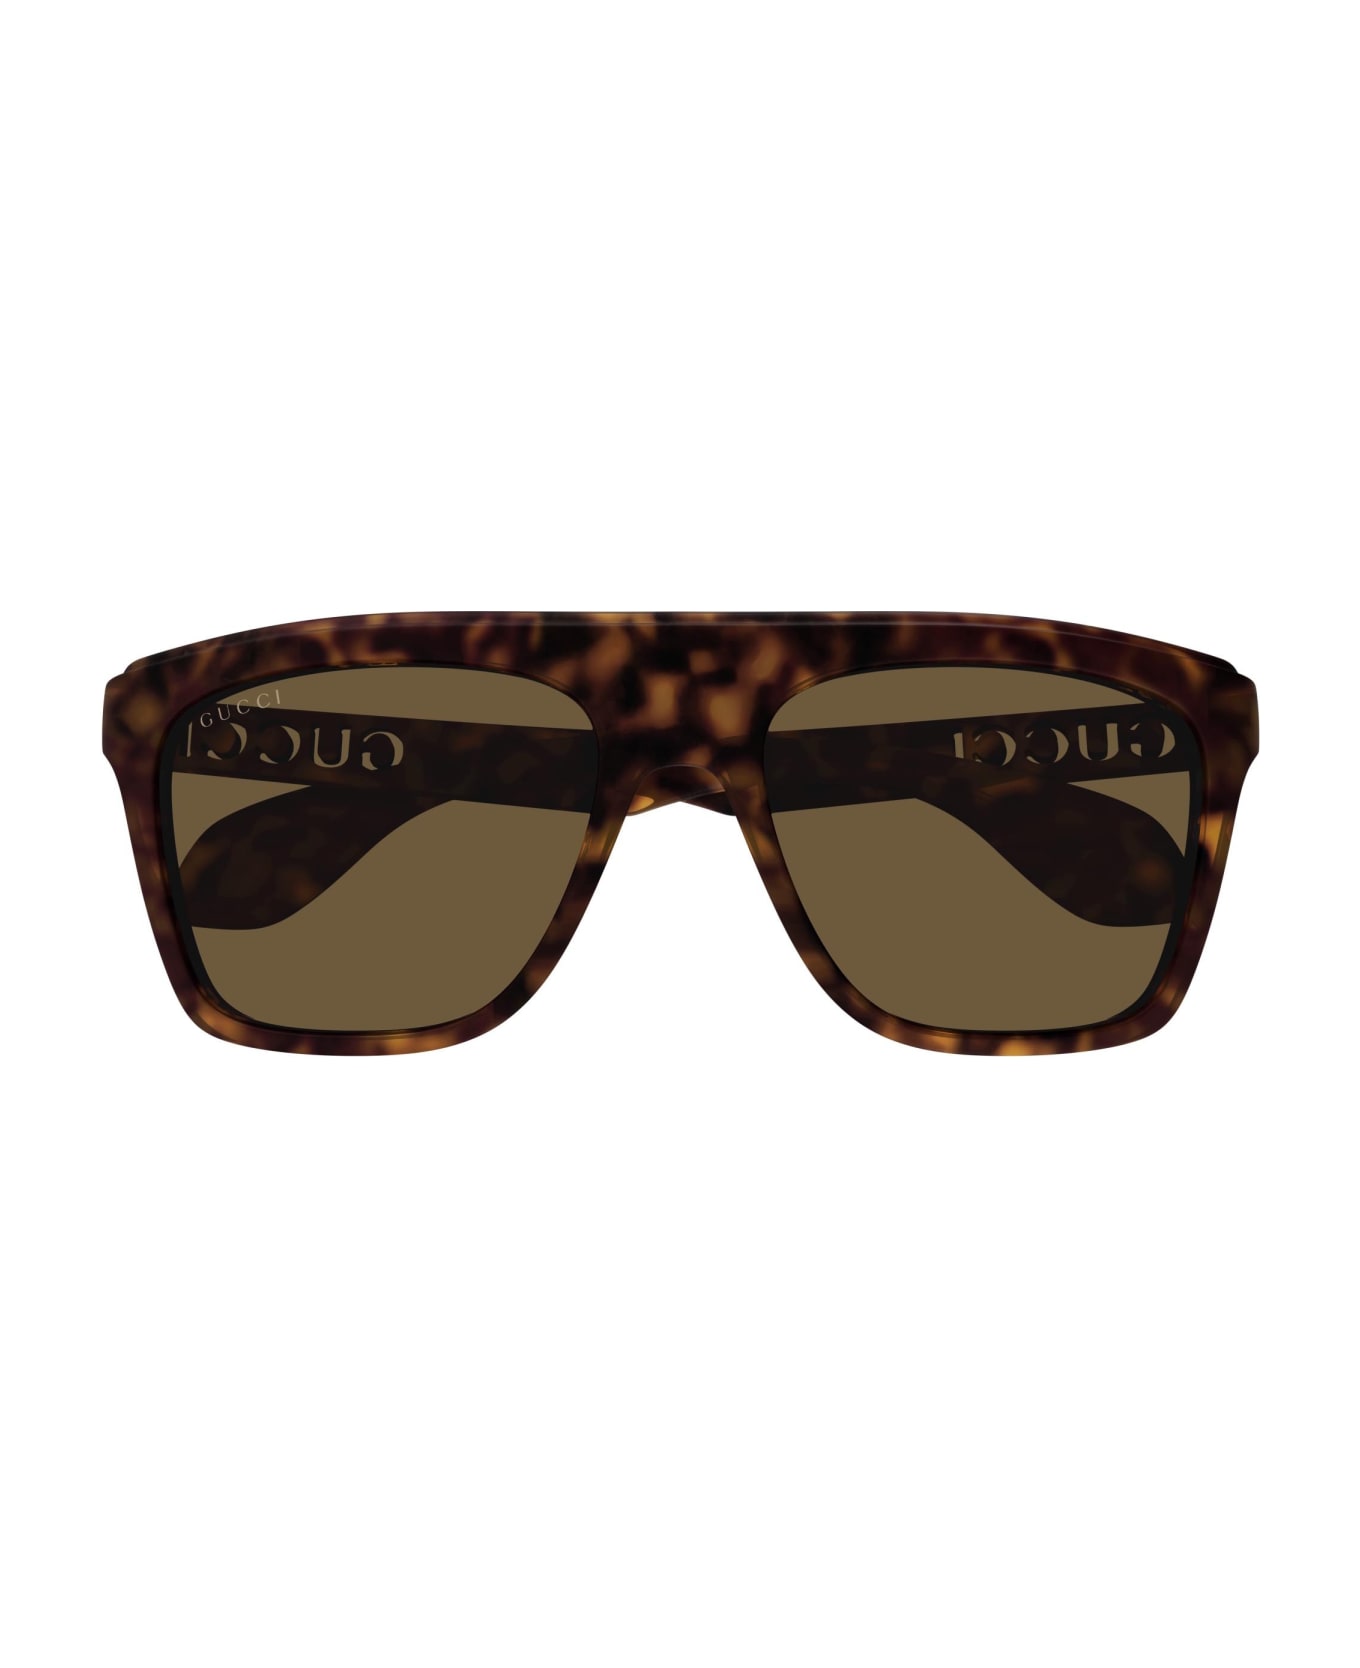 Gucci Eyewear Sunglasses - Havana/Marrone サングラス